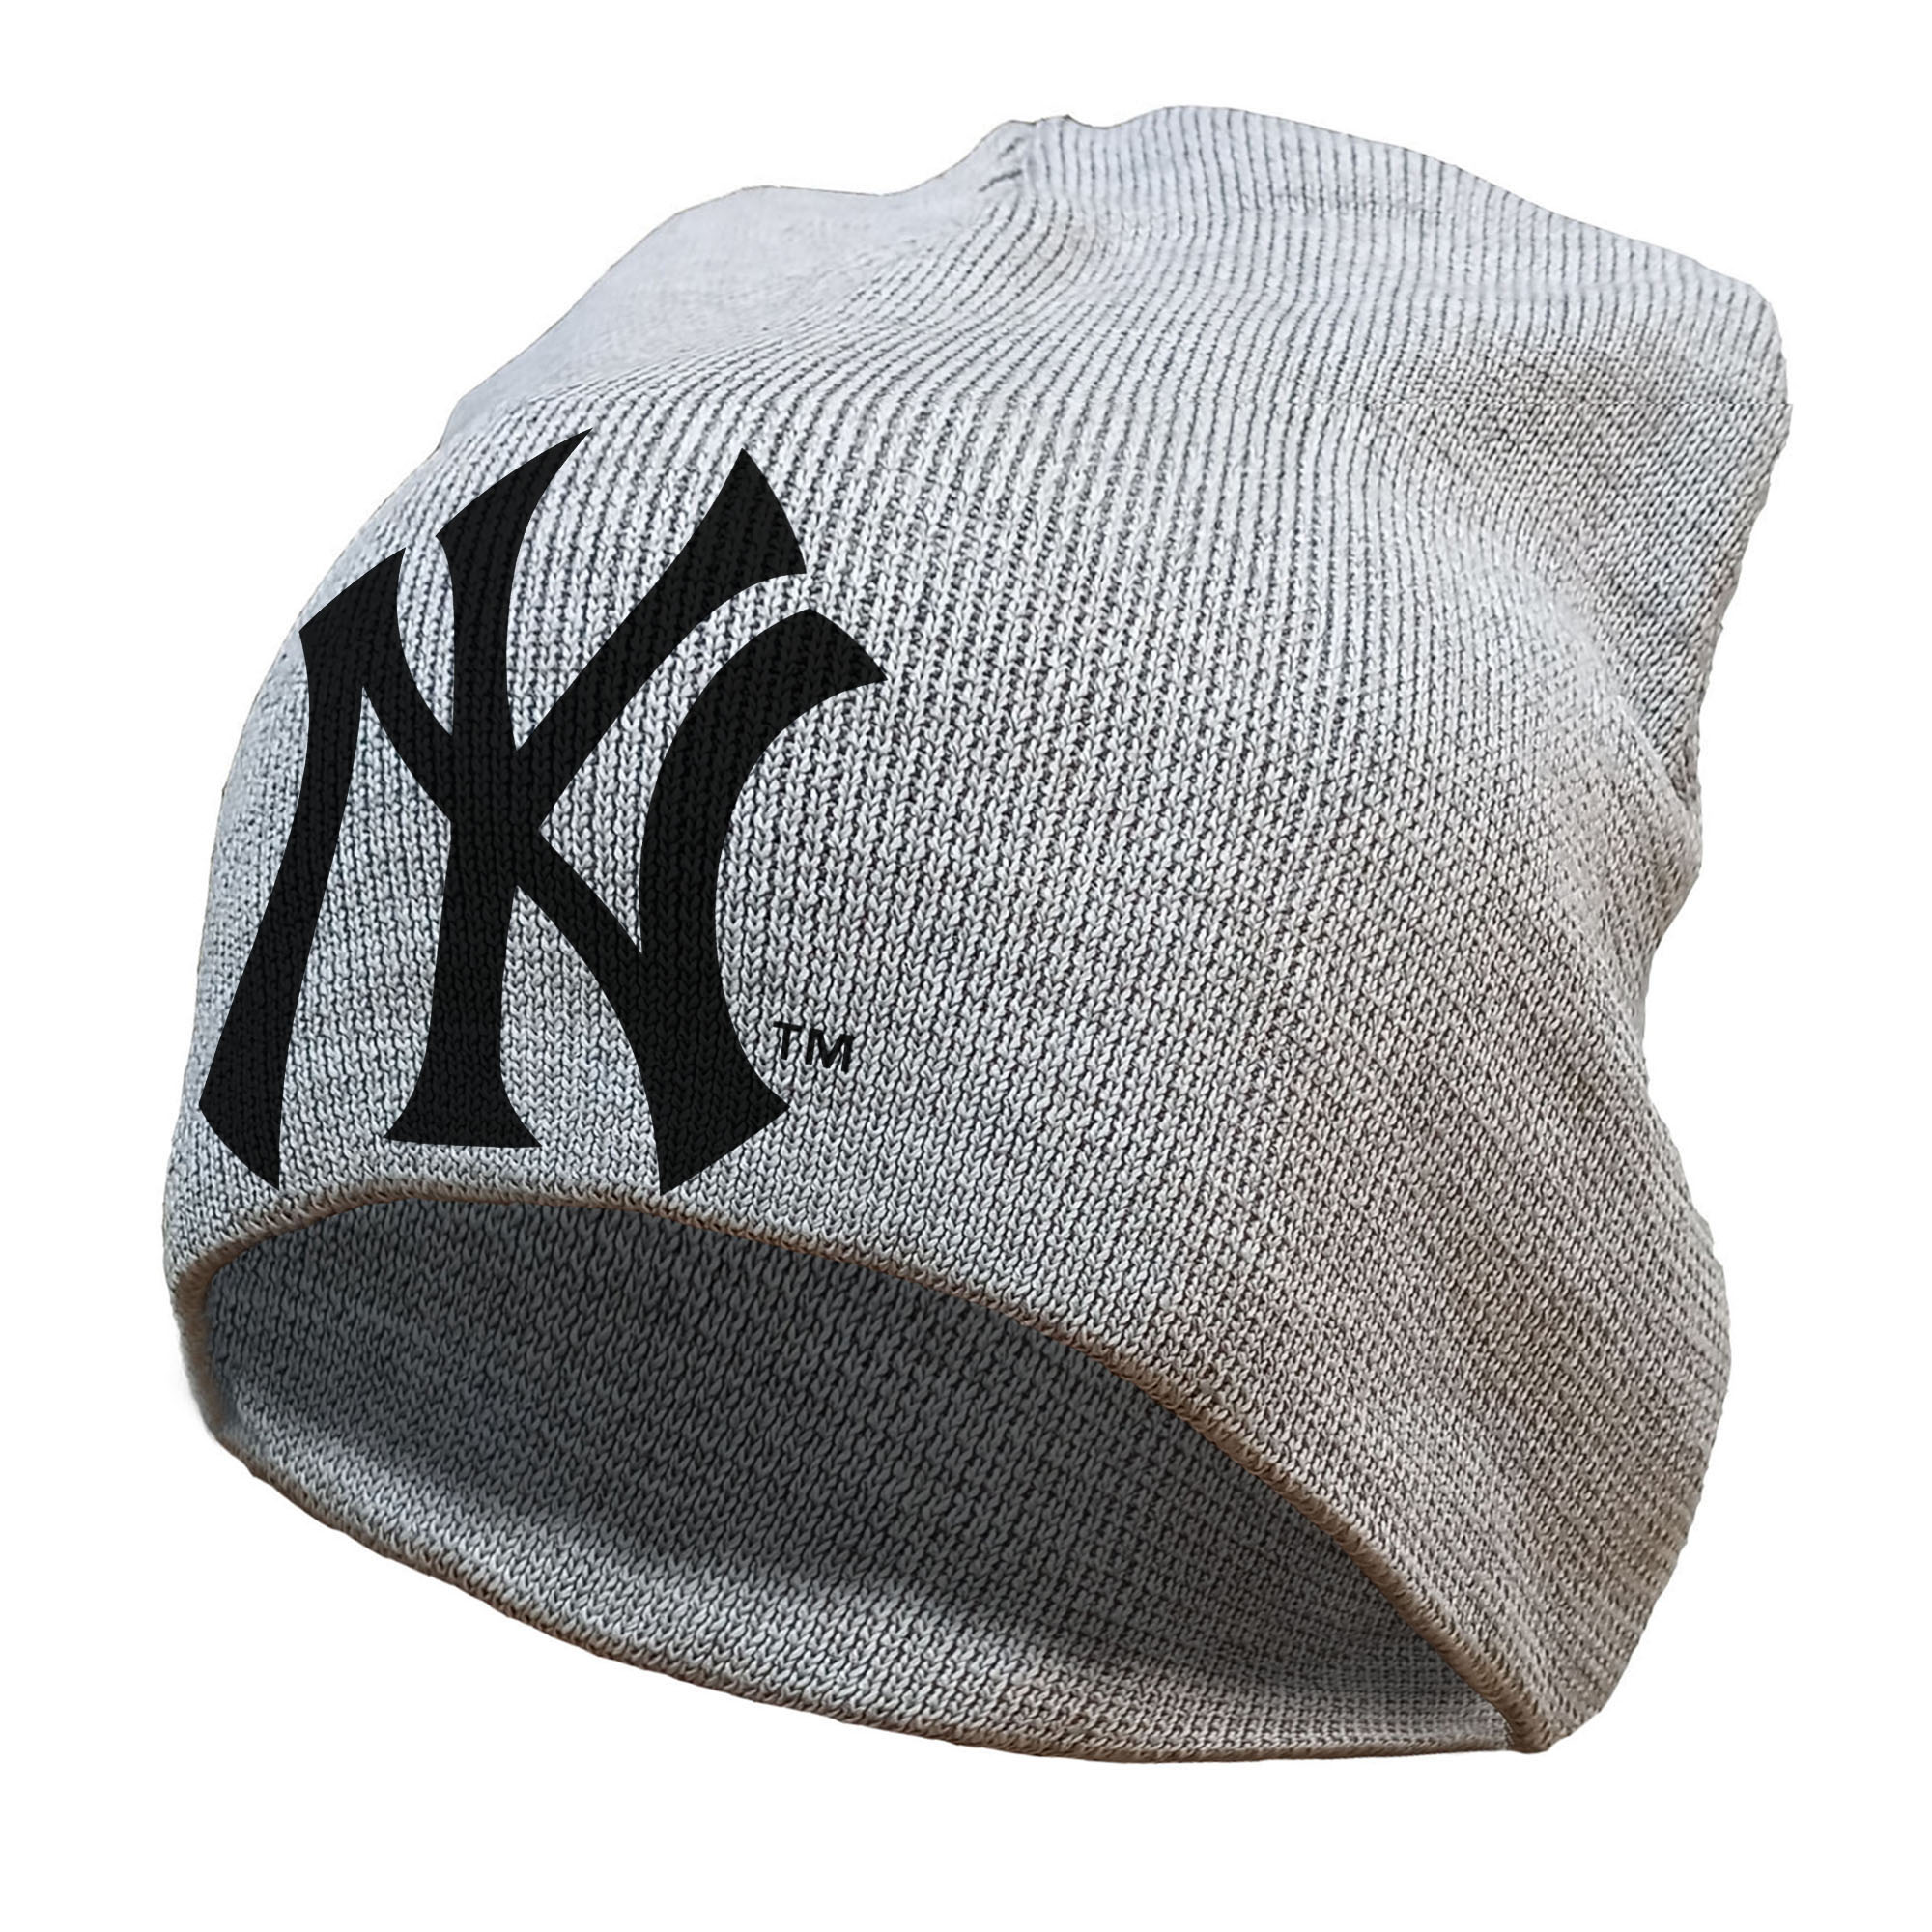 کلاه بافتنی آی تمر مدل نیویورک NY کد 105 -  - 1